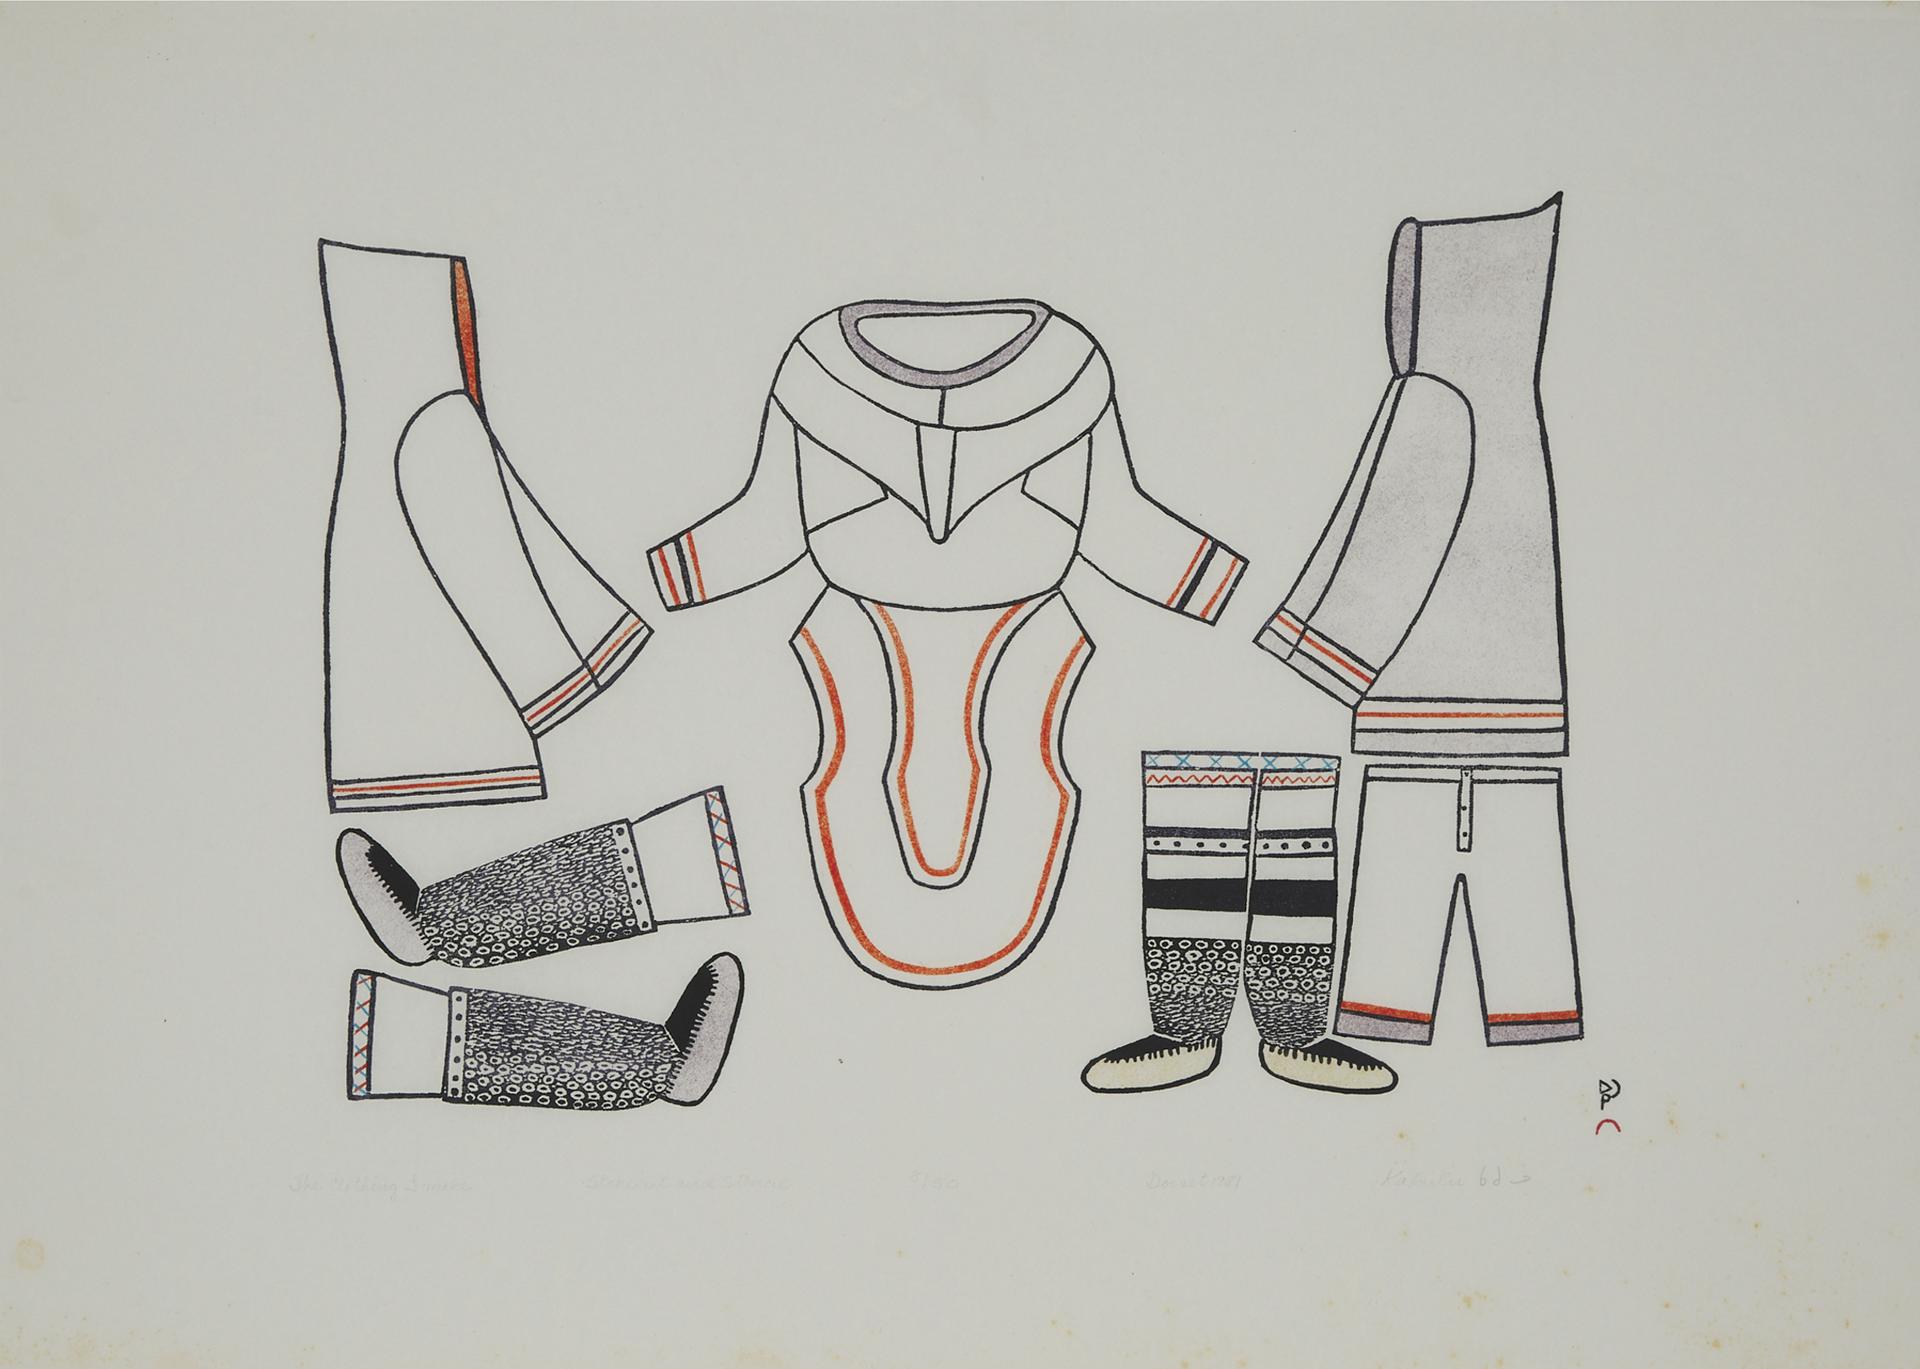 Kakulu Saggiaktok Sagiatuk (1940-2020) - The Clothing I Make